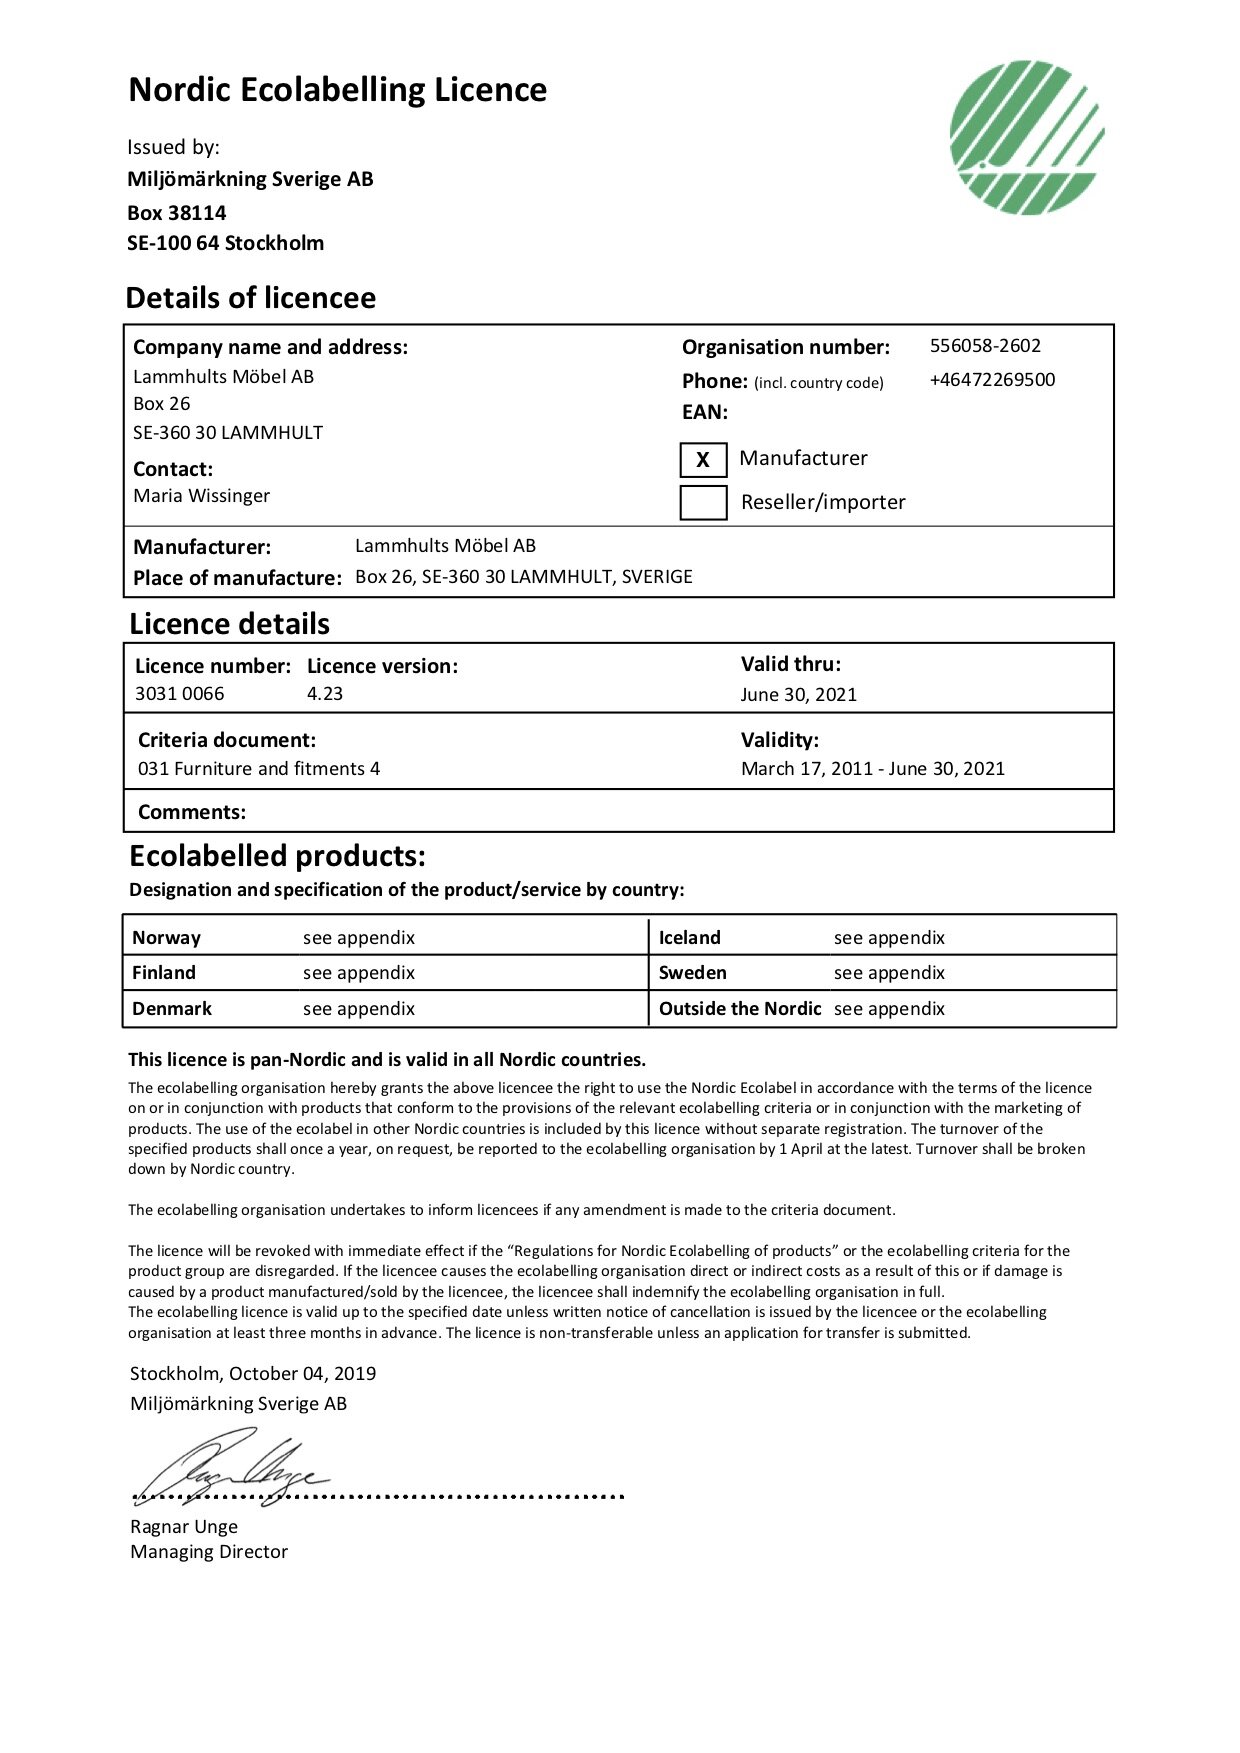 Swan Certificate - Details